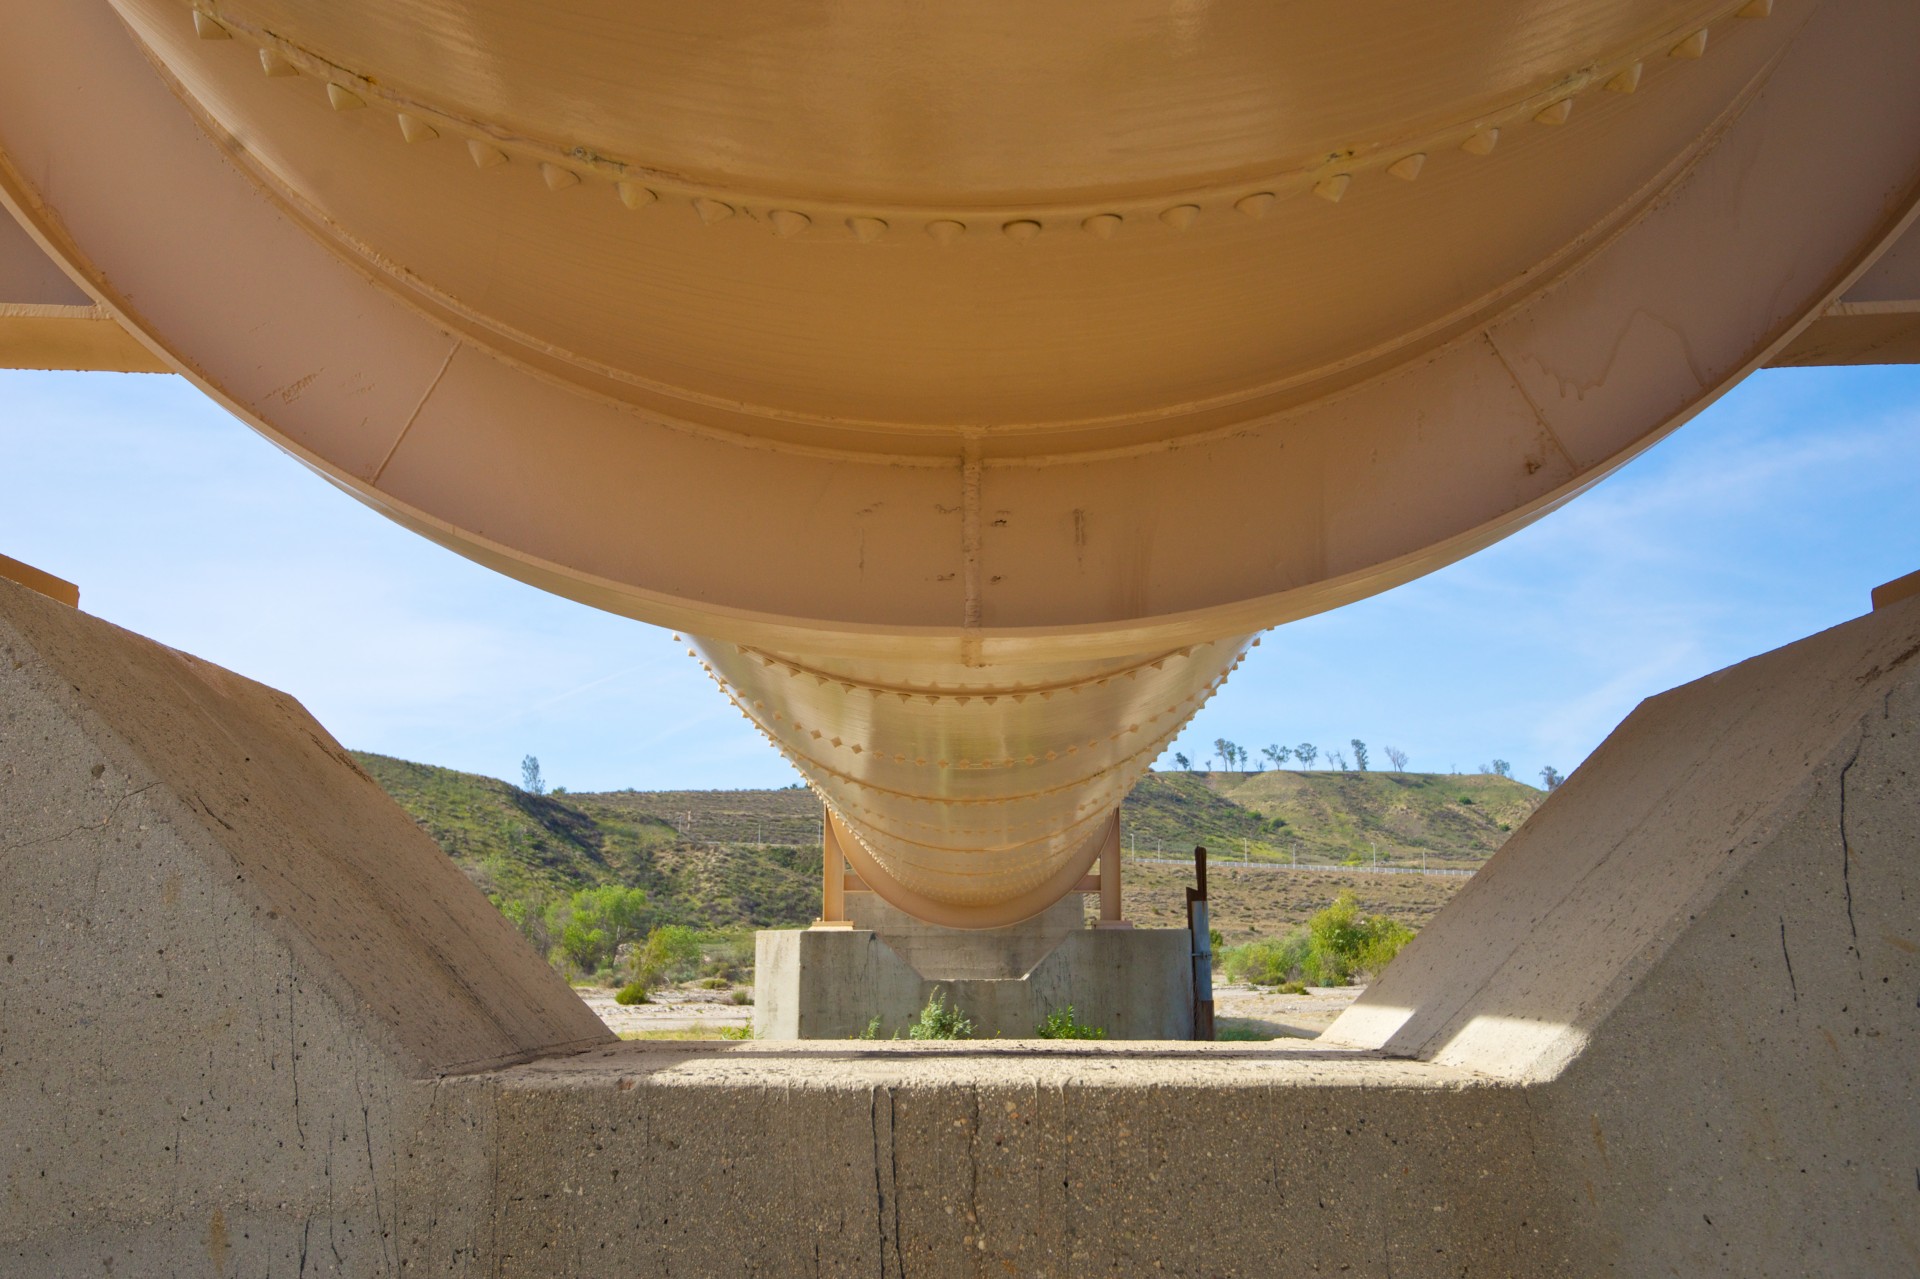 Pipeline Closeup Underside